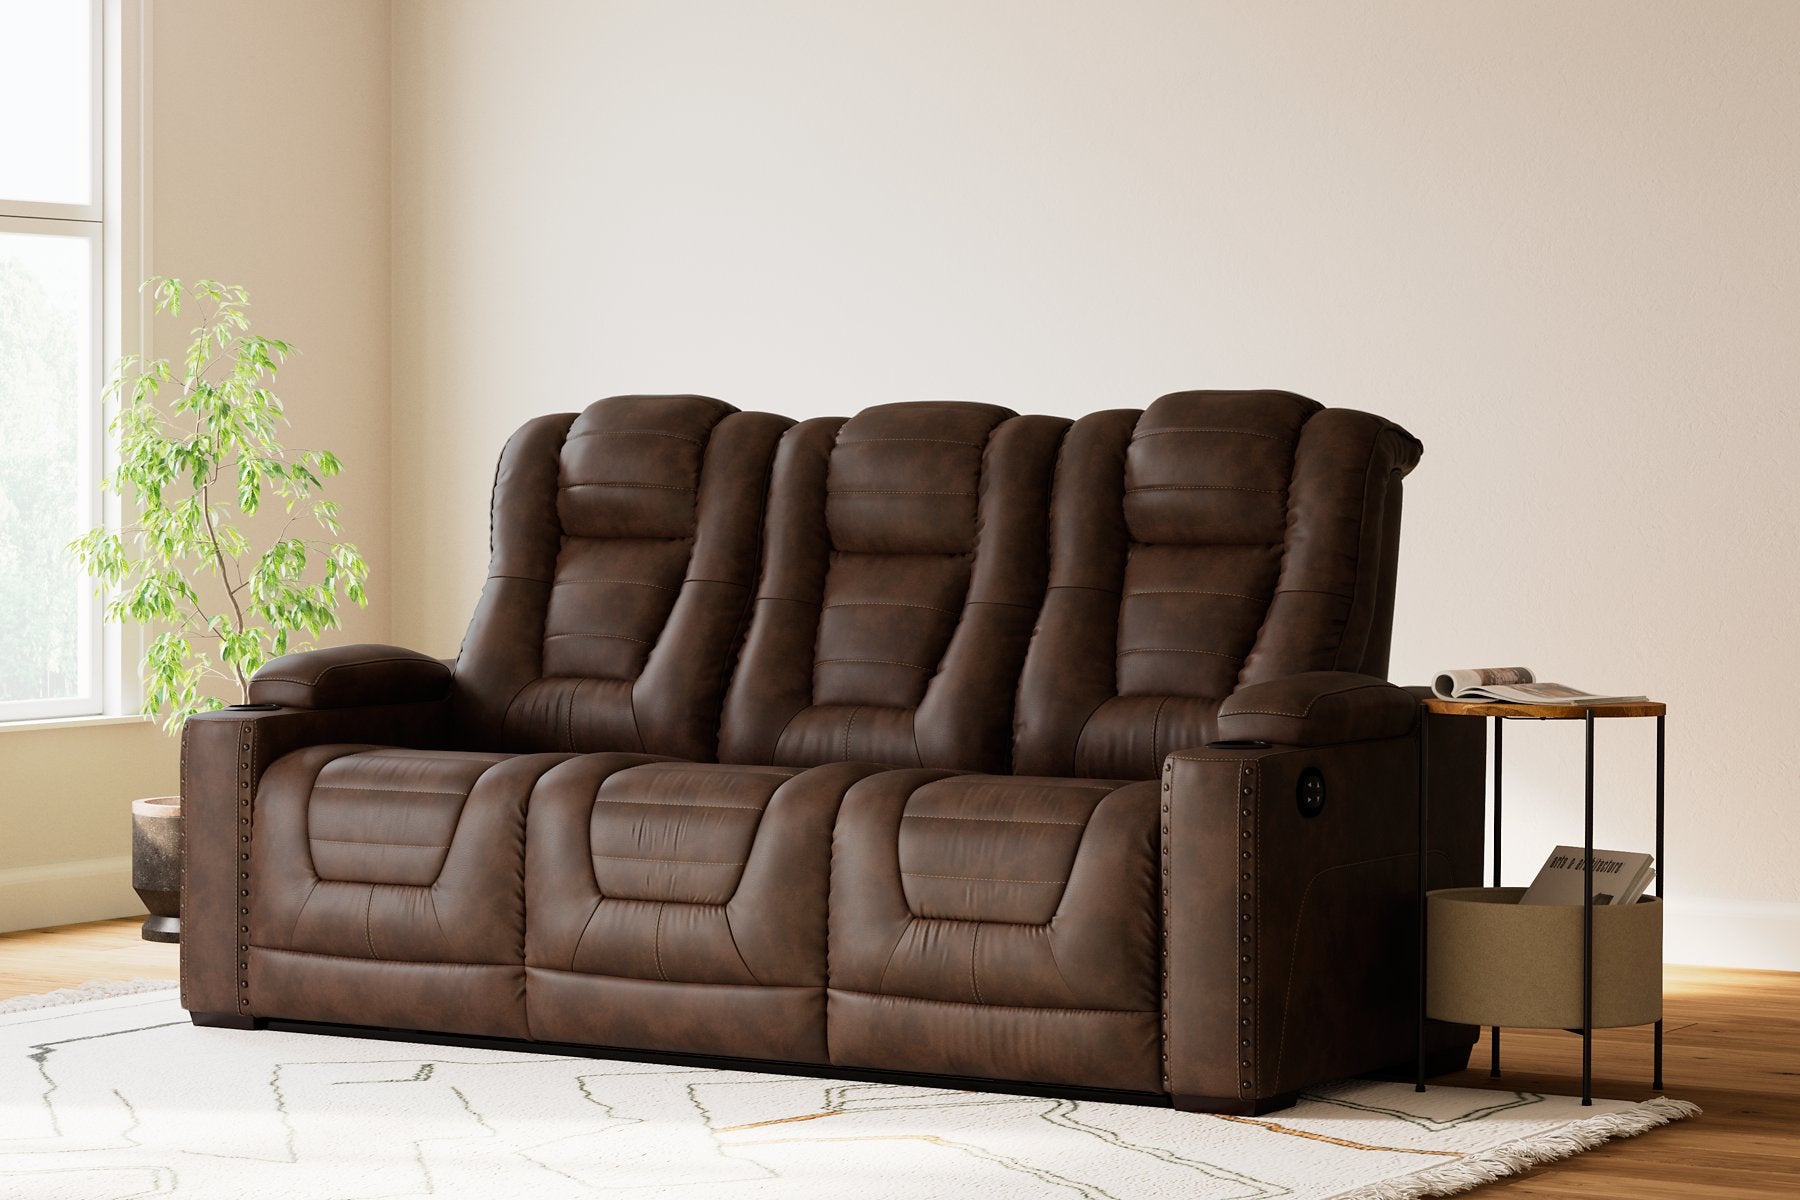 Owner's Box Living Room Set - Luxury Home Furniture (MI)